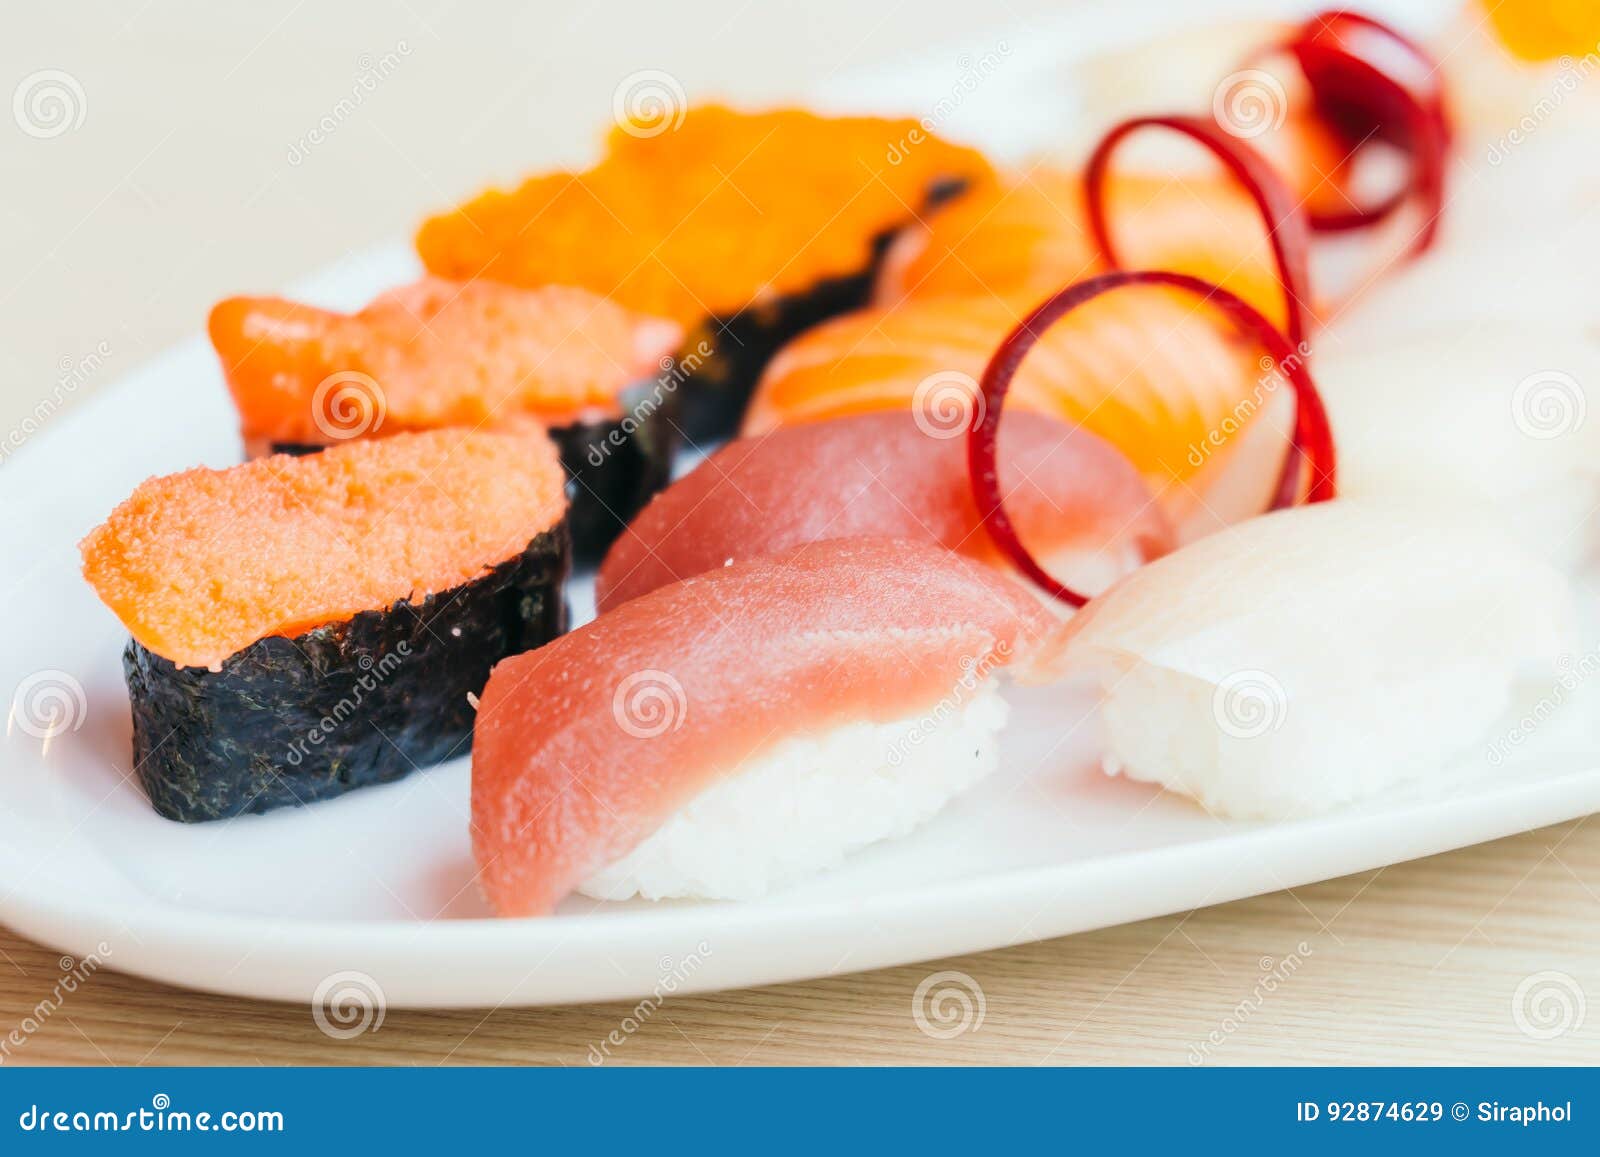 raw and fresh nigiri sushi